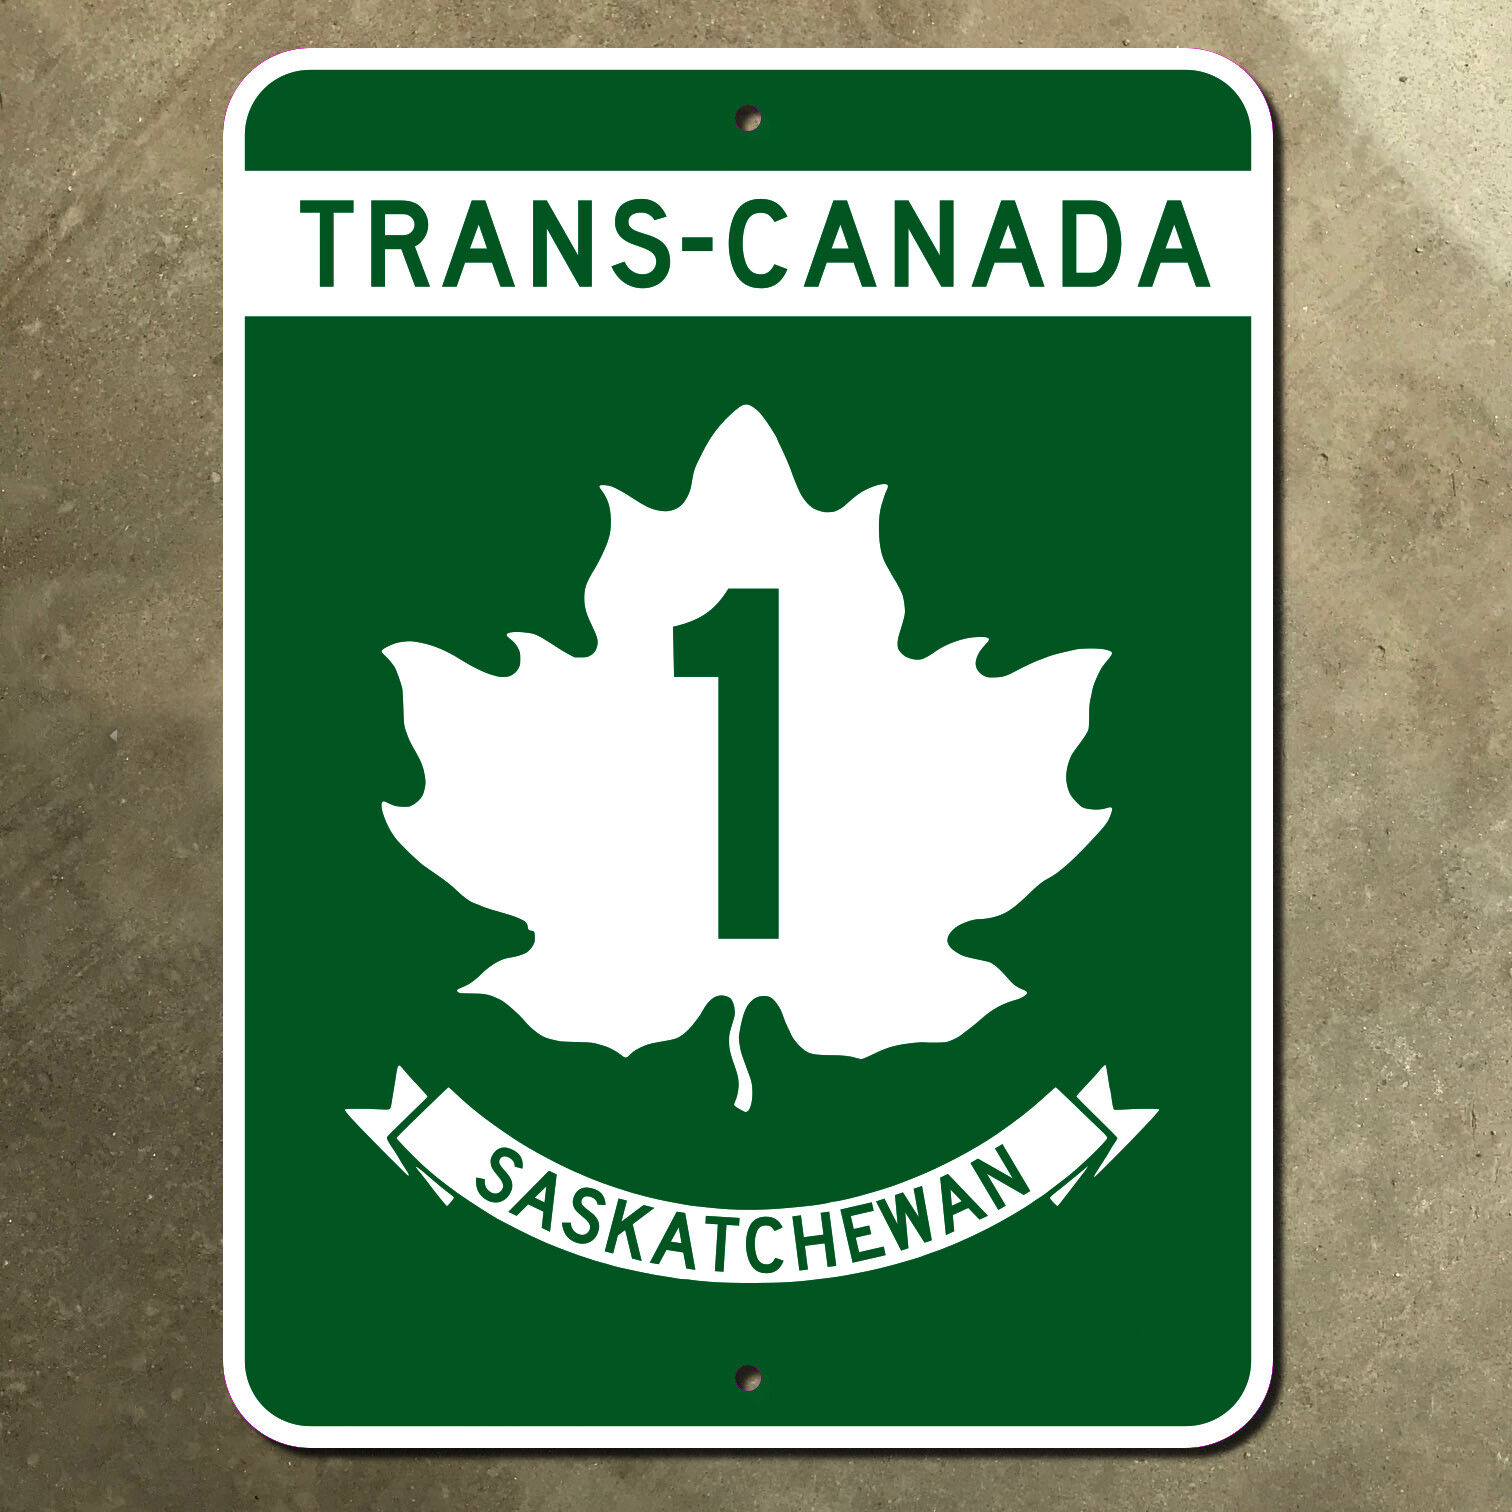 Canada Saskatchewan Trans-Canada Highway 1 Regina marker road sign 1980s 9x12